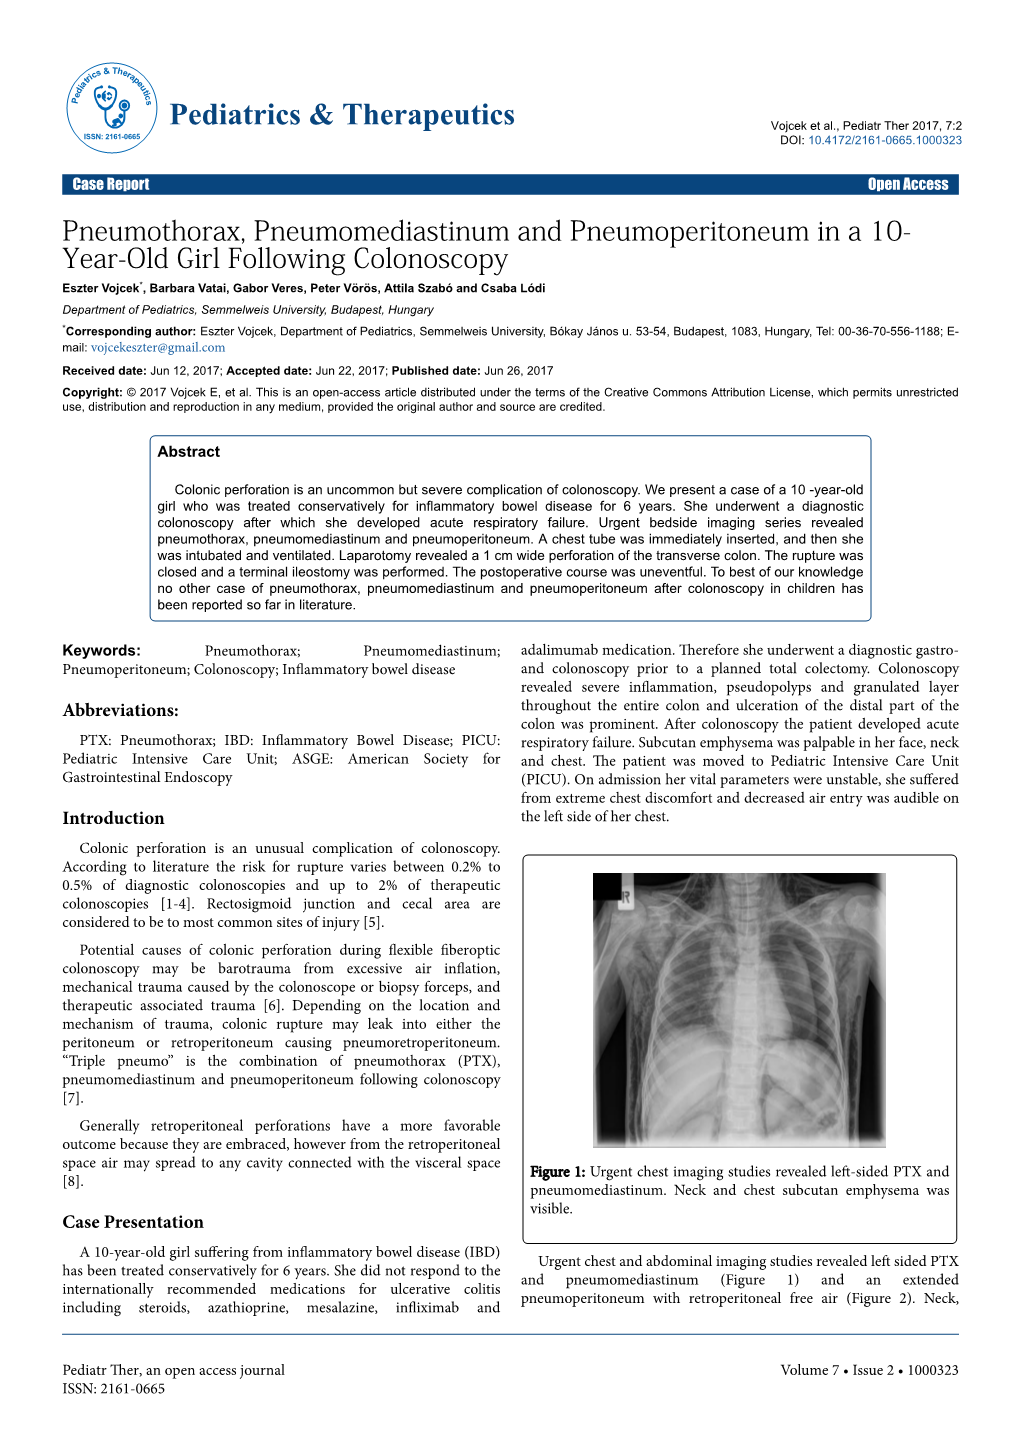 Pneumothorax, Pneumomediastinum and Pneumoperitoneum in a 10-Year-Old Girl Following Colonoscopy